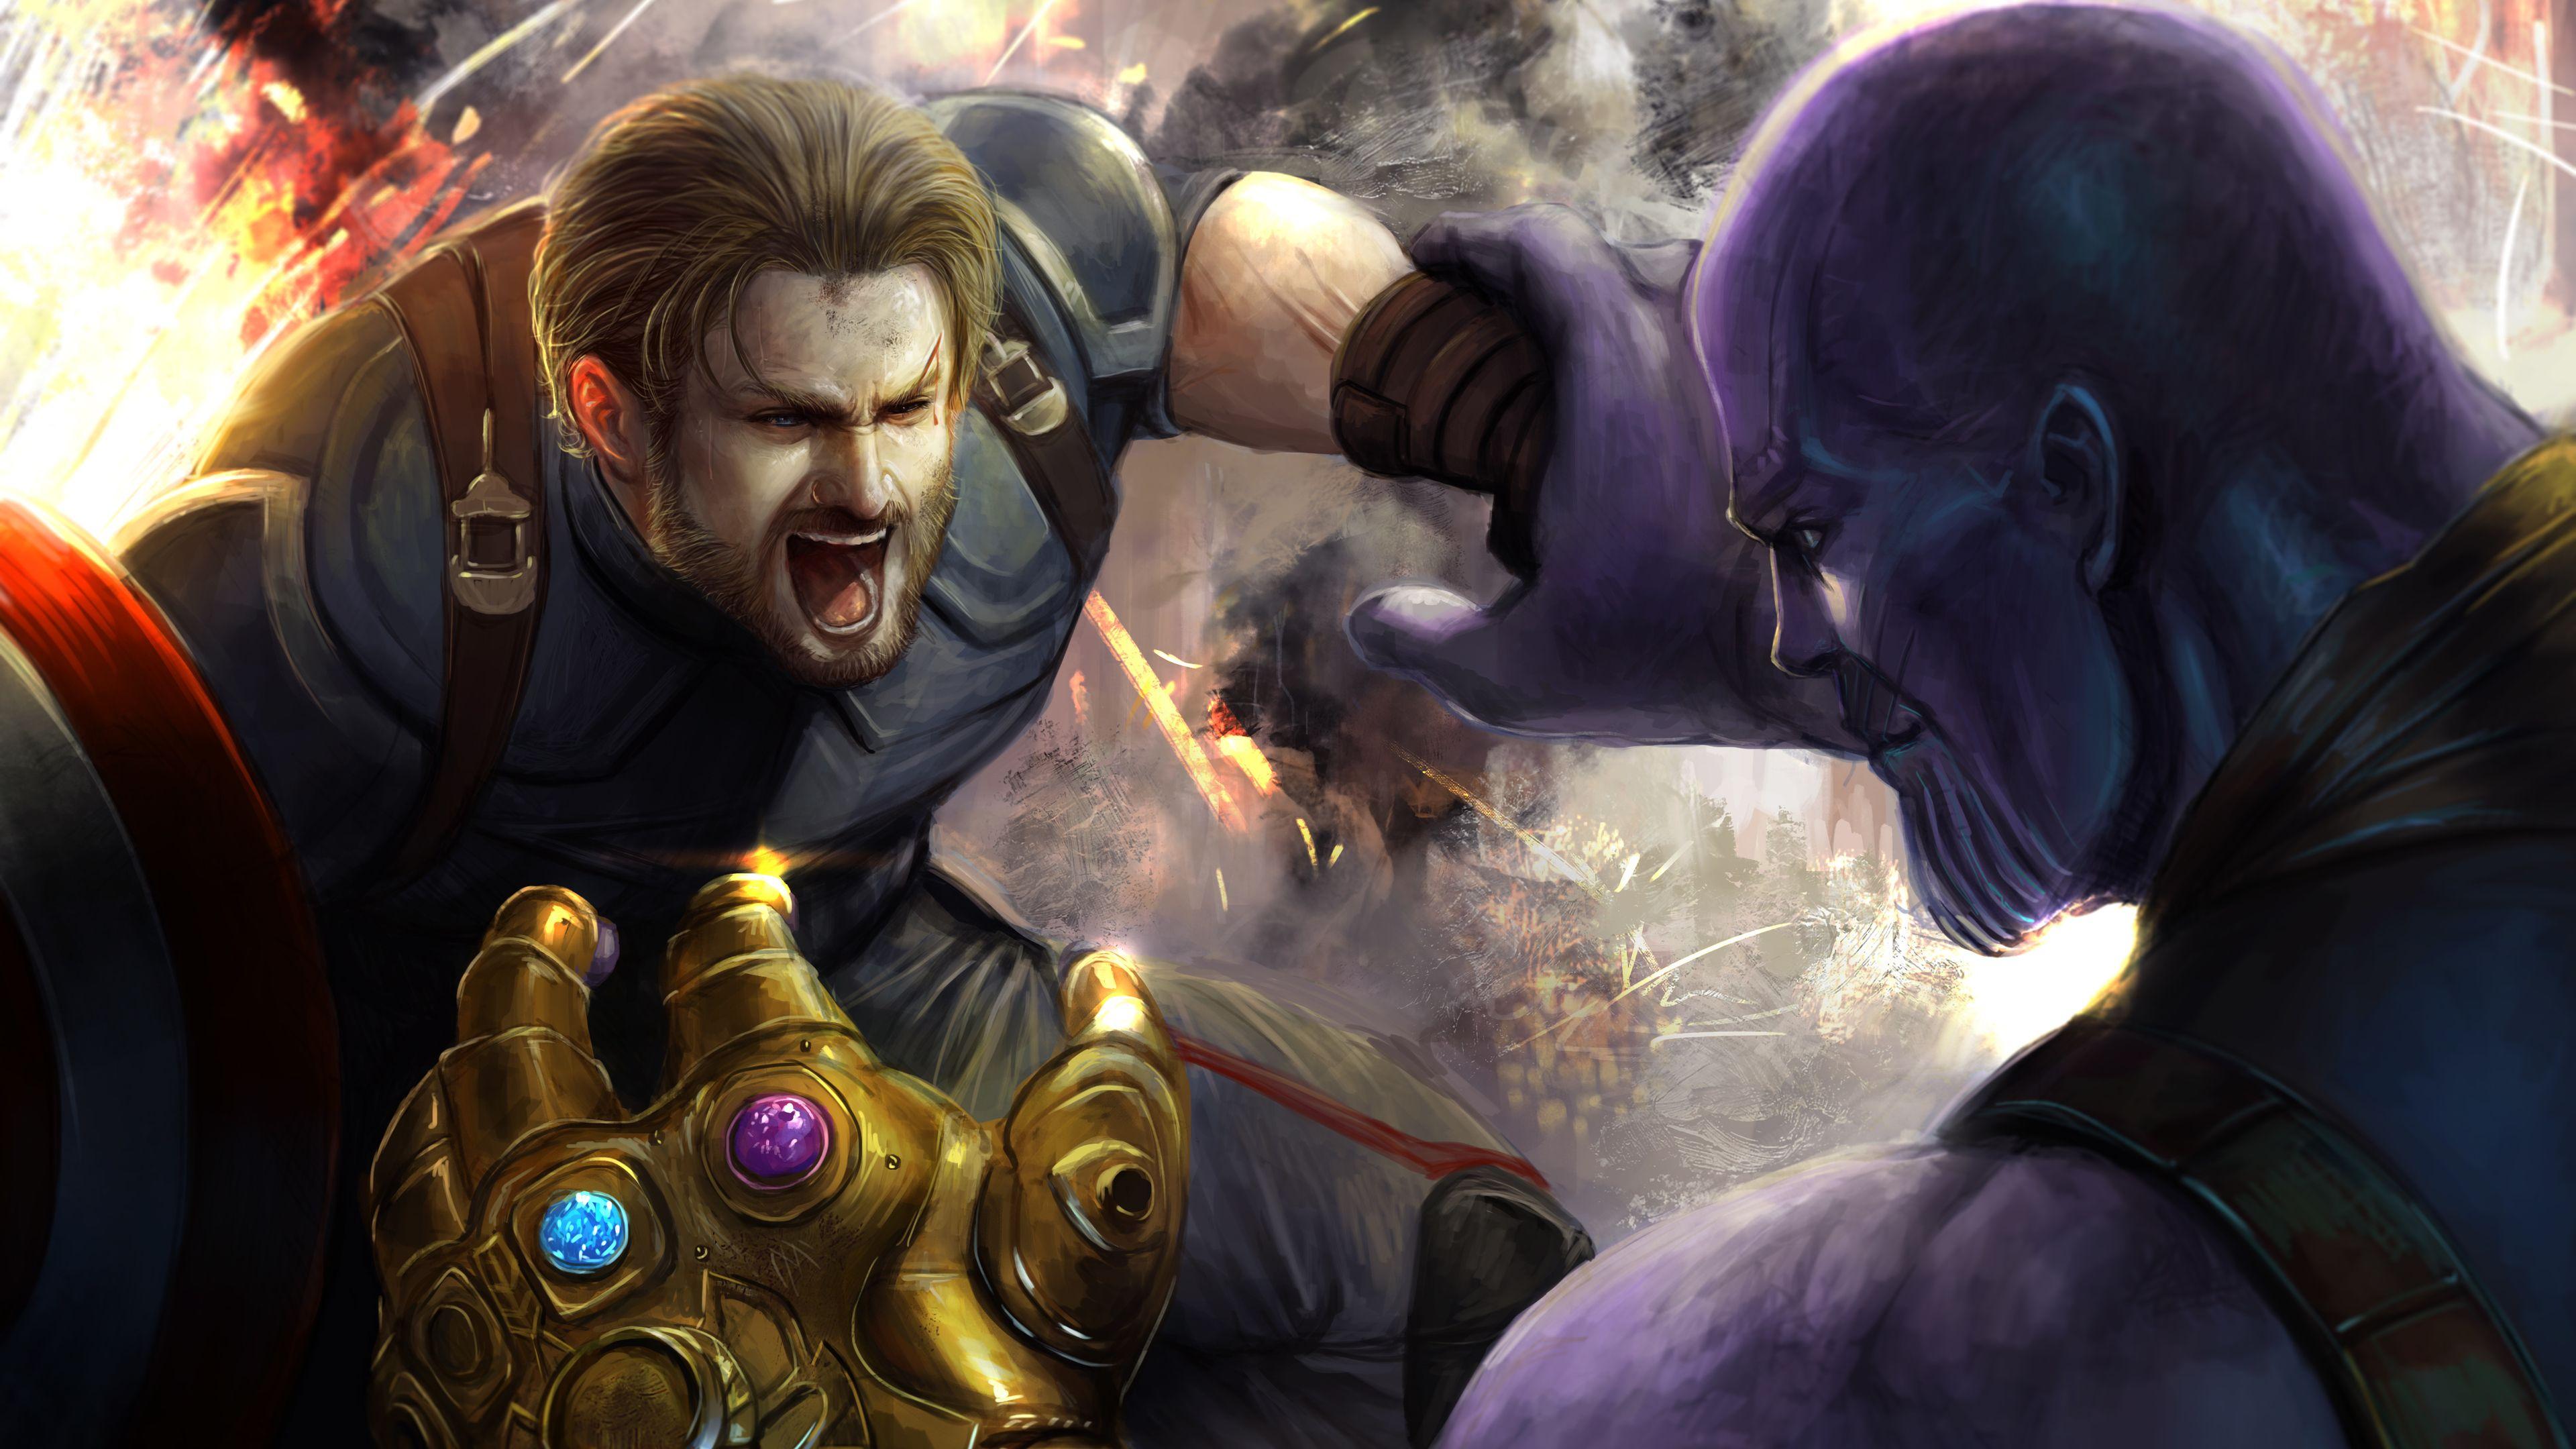 Captain America Vs Thanos Wallpaper Free Captain America Vs Thanos Background